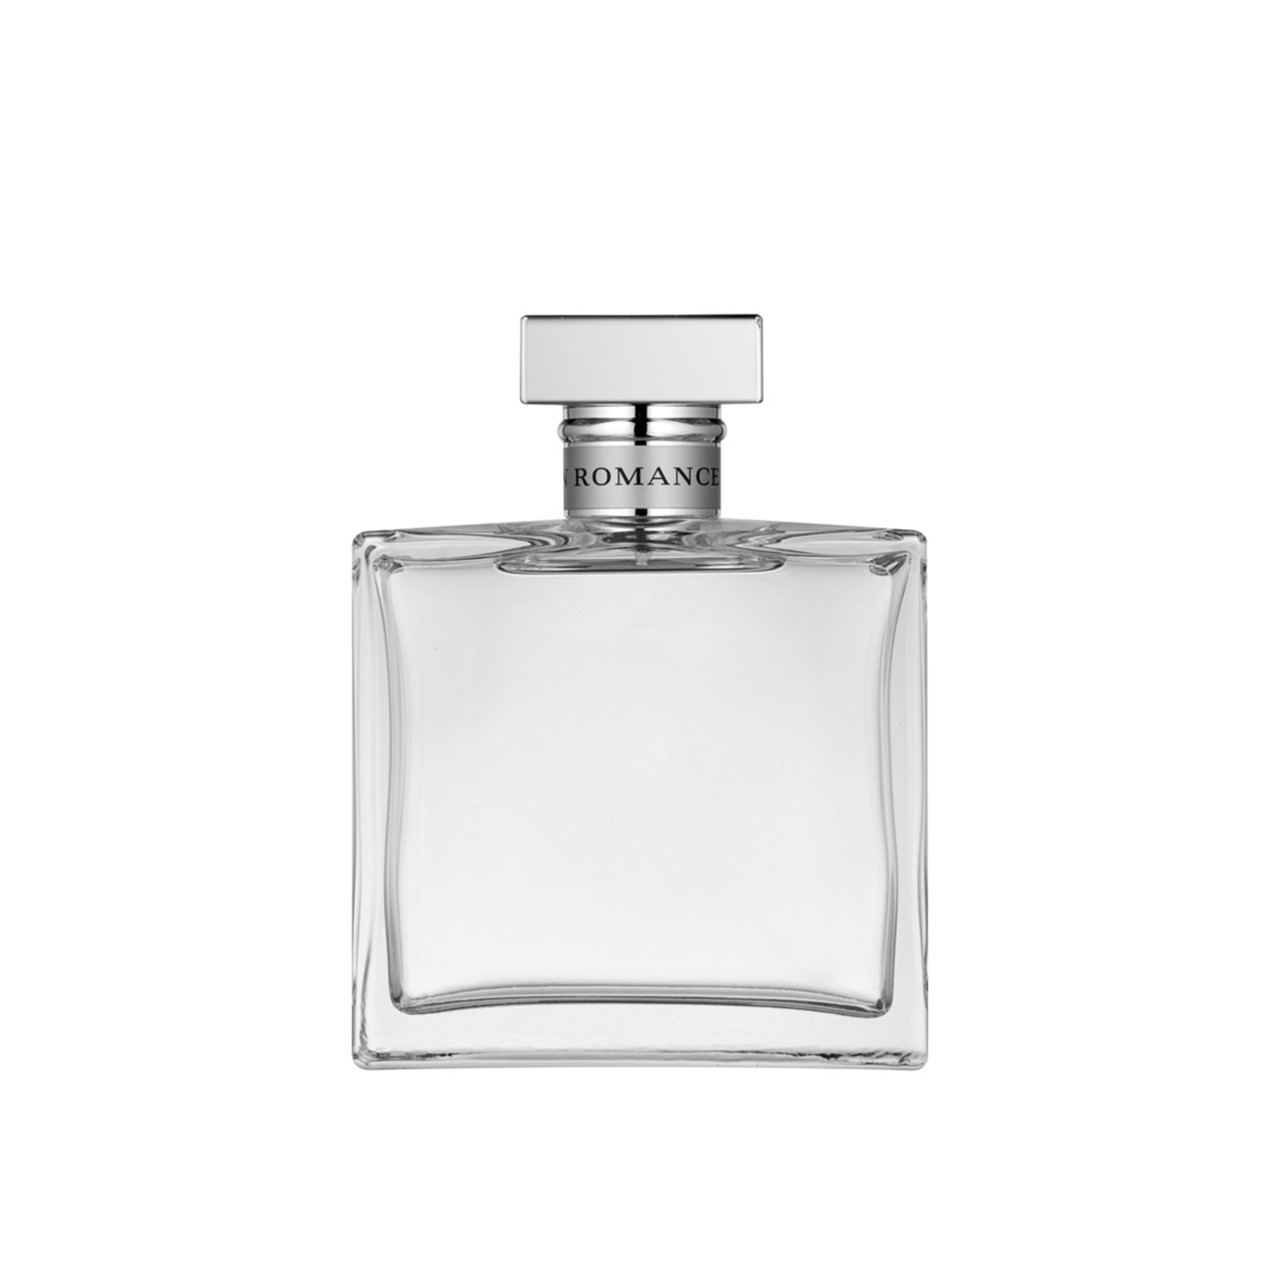 https://static.beautytocare.com/media/catalog/product/r/a/ralph-lauren-romance-eau-de-parfum-100ml.jpg